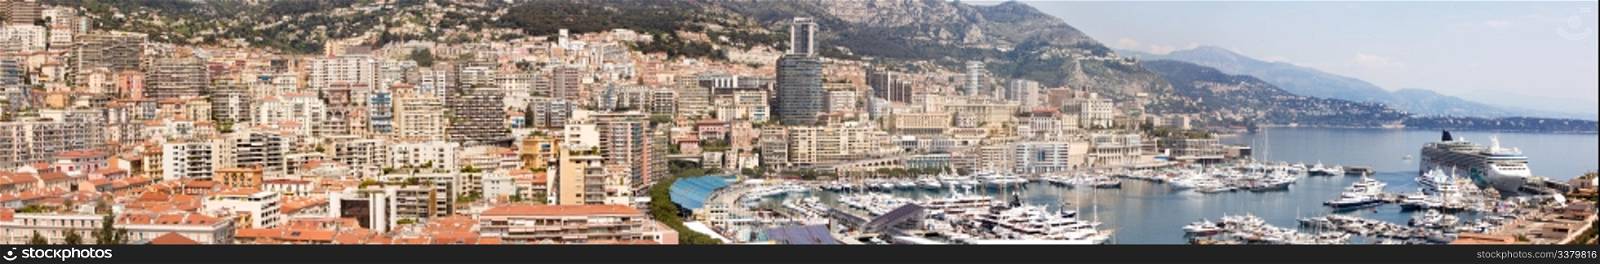 A high resolution panorama of Monaco, Monte Carlo